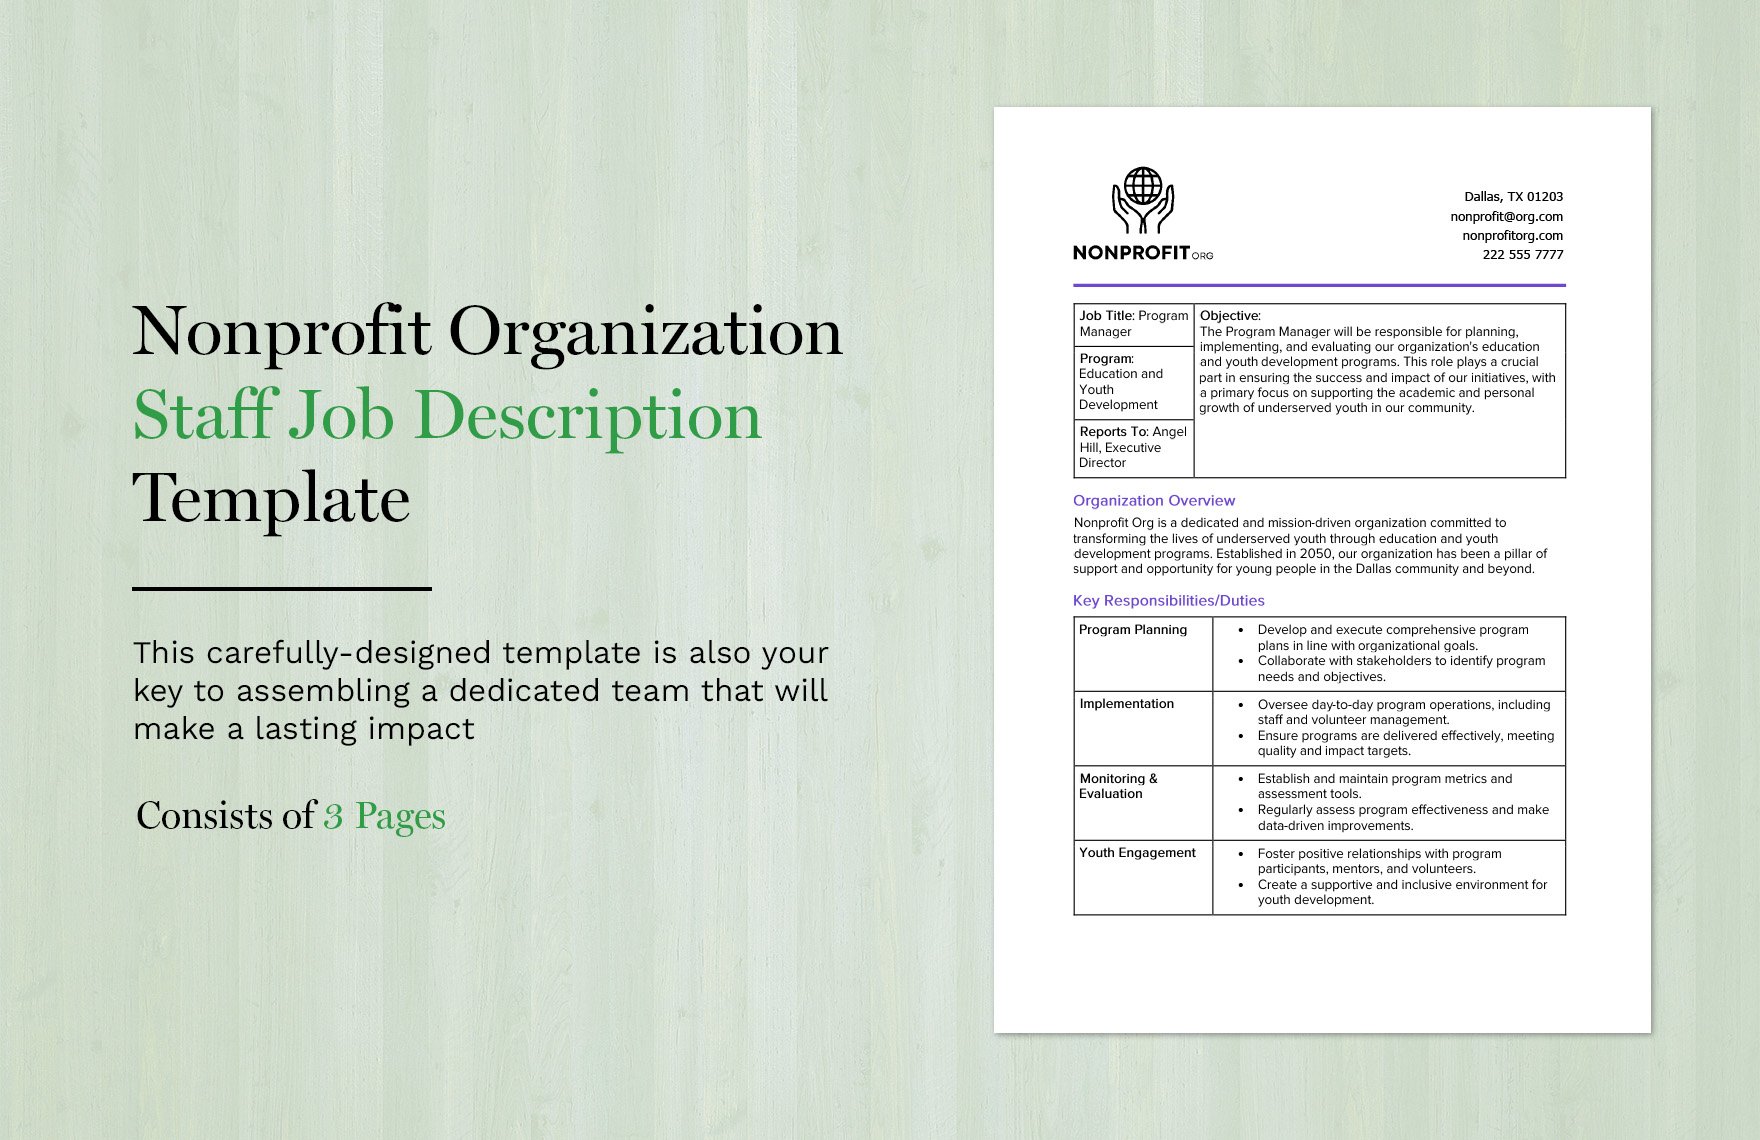 Nonprofit Organization Staff Job Description Template